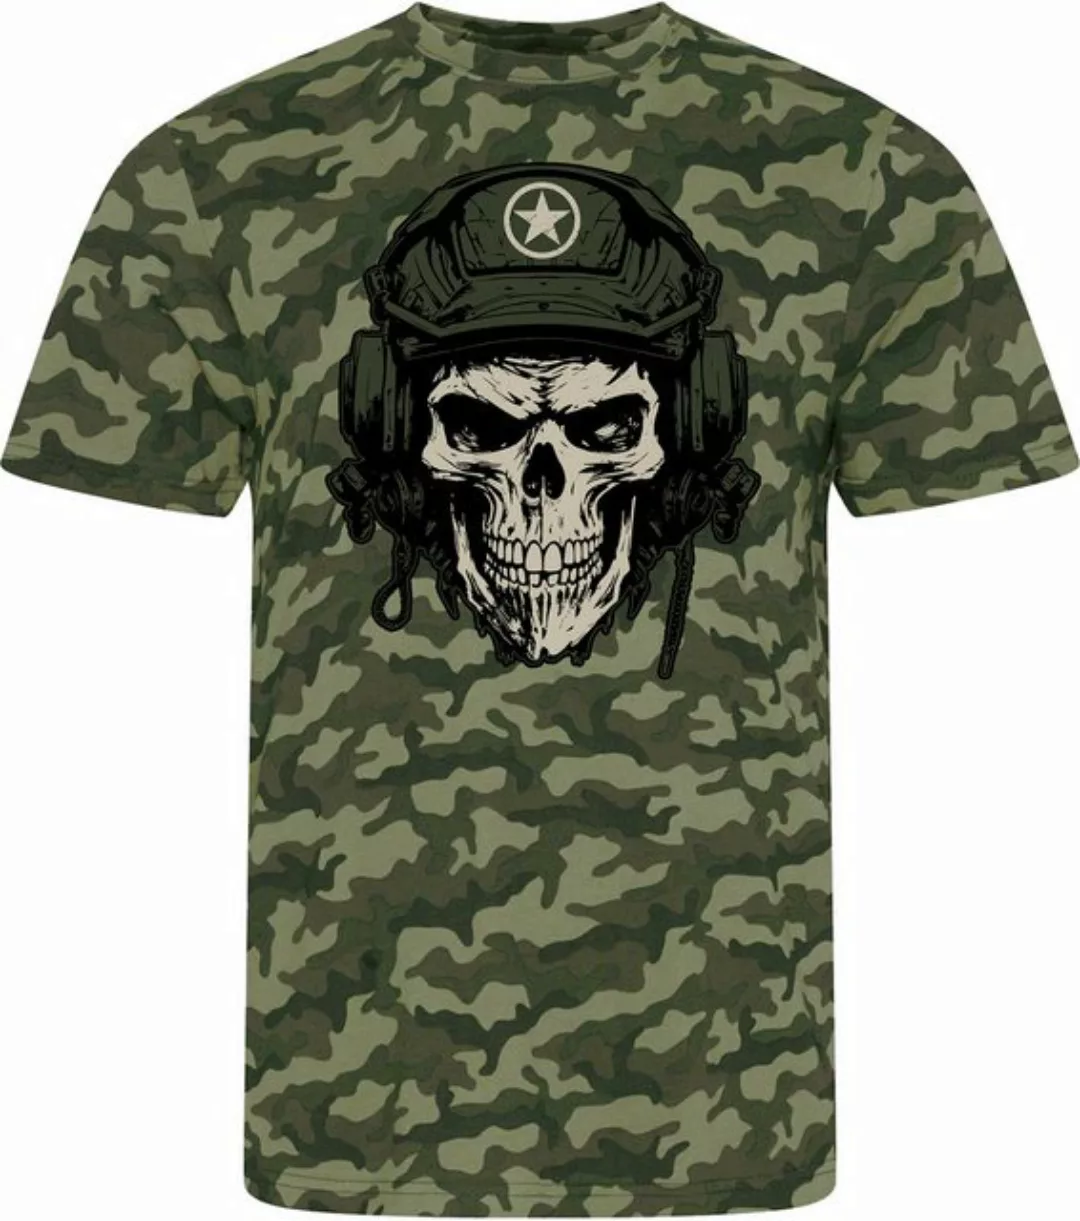 Baddery Print-Shirt US Army Shirt - Tank Skull - USA Camouflage T-Shirt Män günstig online kaufen